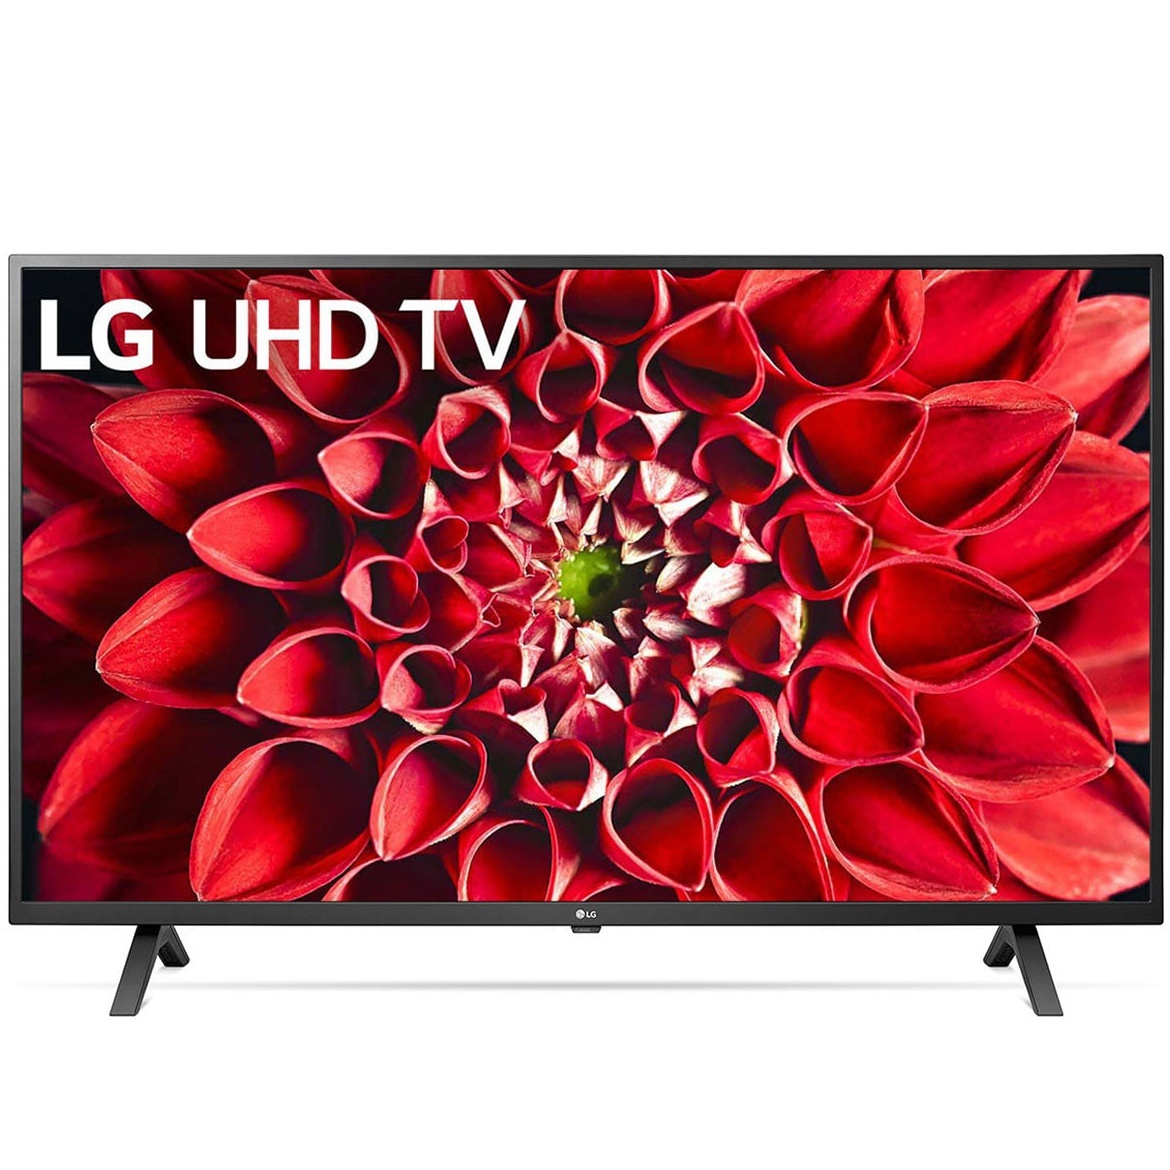 LG Smart TV 43 inch IPS 4K UHD 43UN7000PTA Active HDR chính hãng model 2020